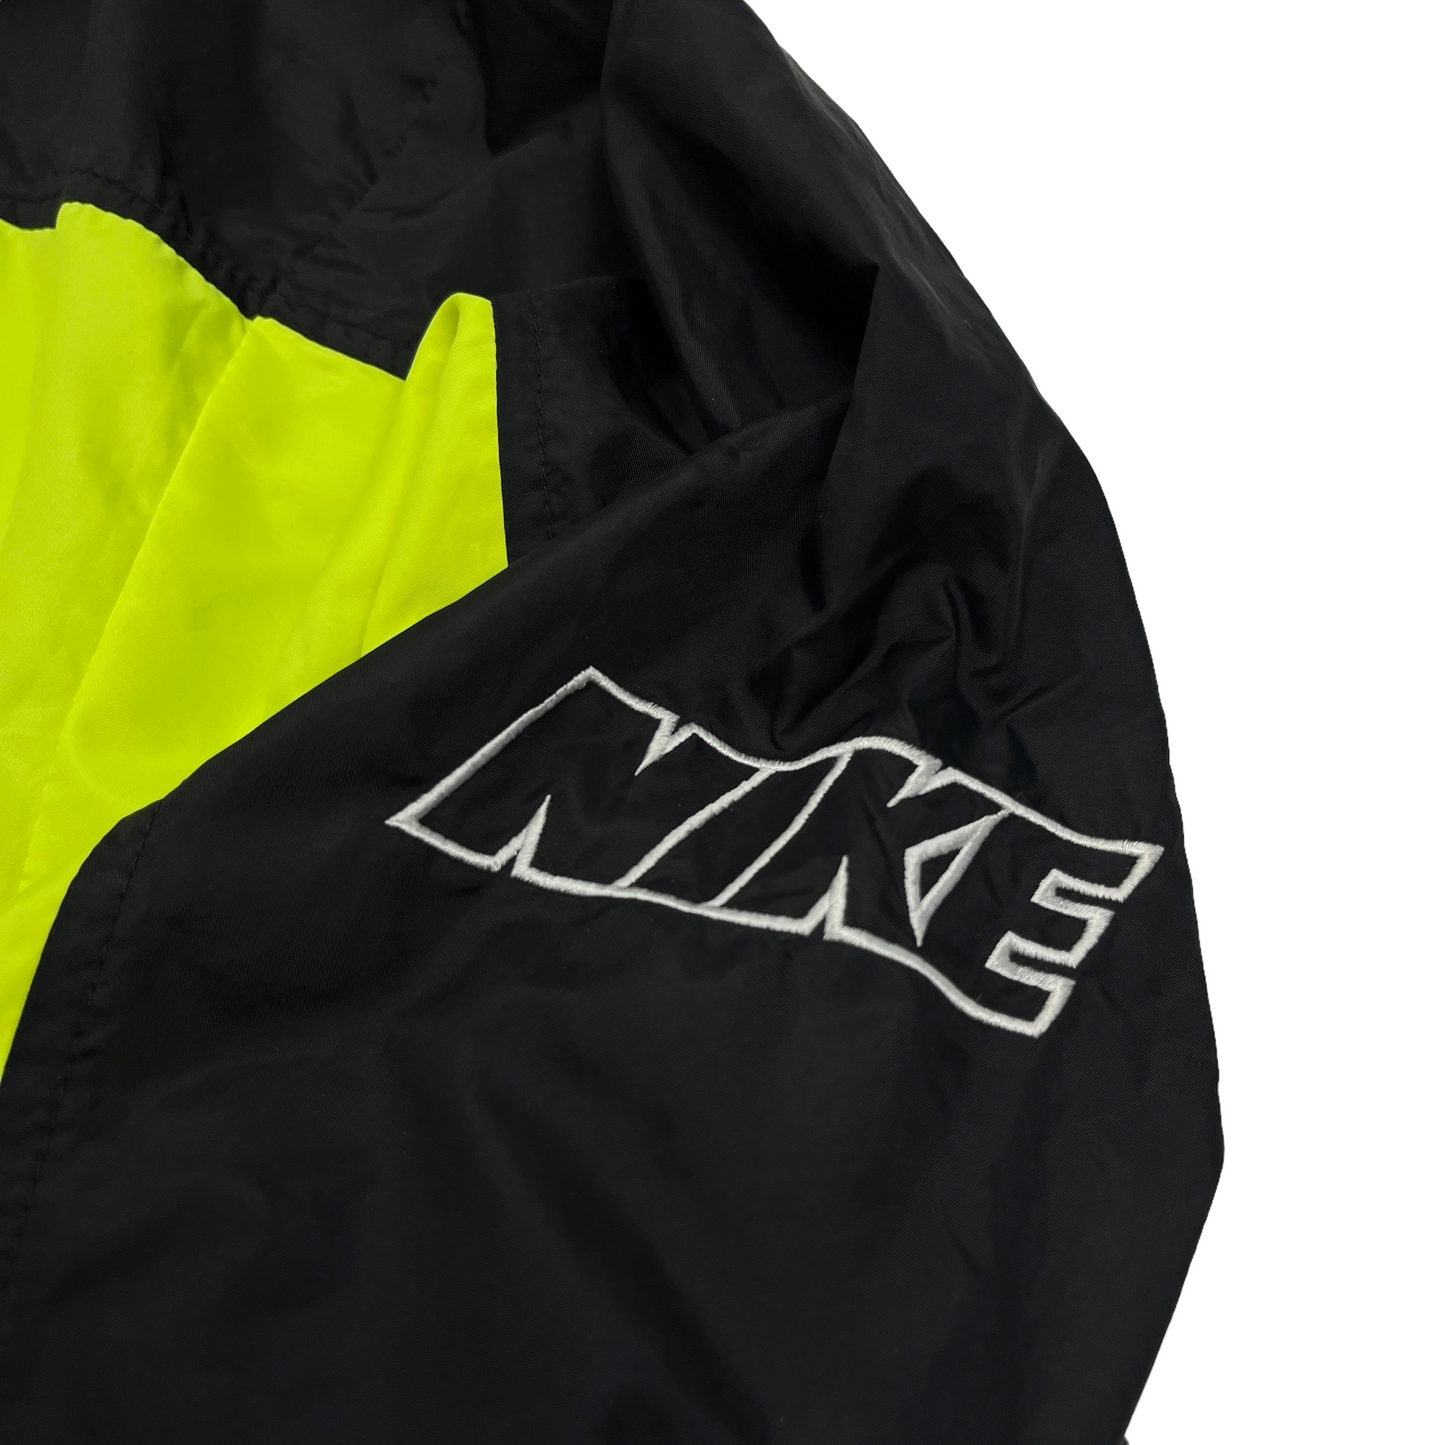 01819 Nike 90s “ Borussia Dortmund “ Tracktop